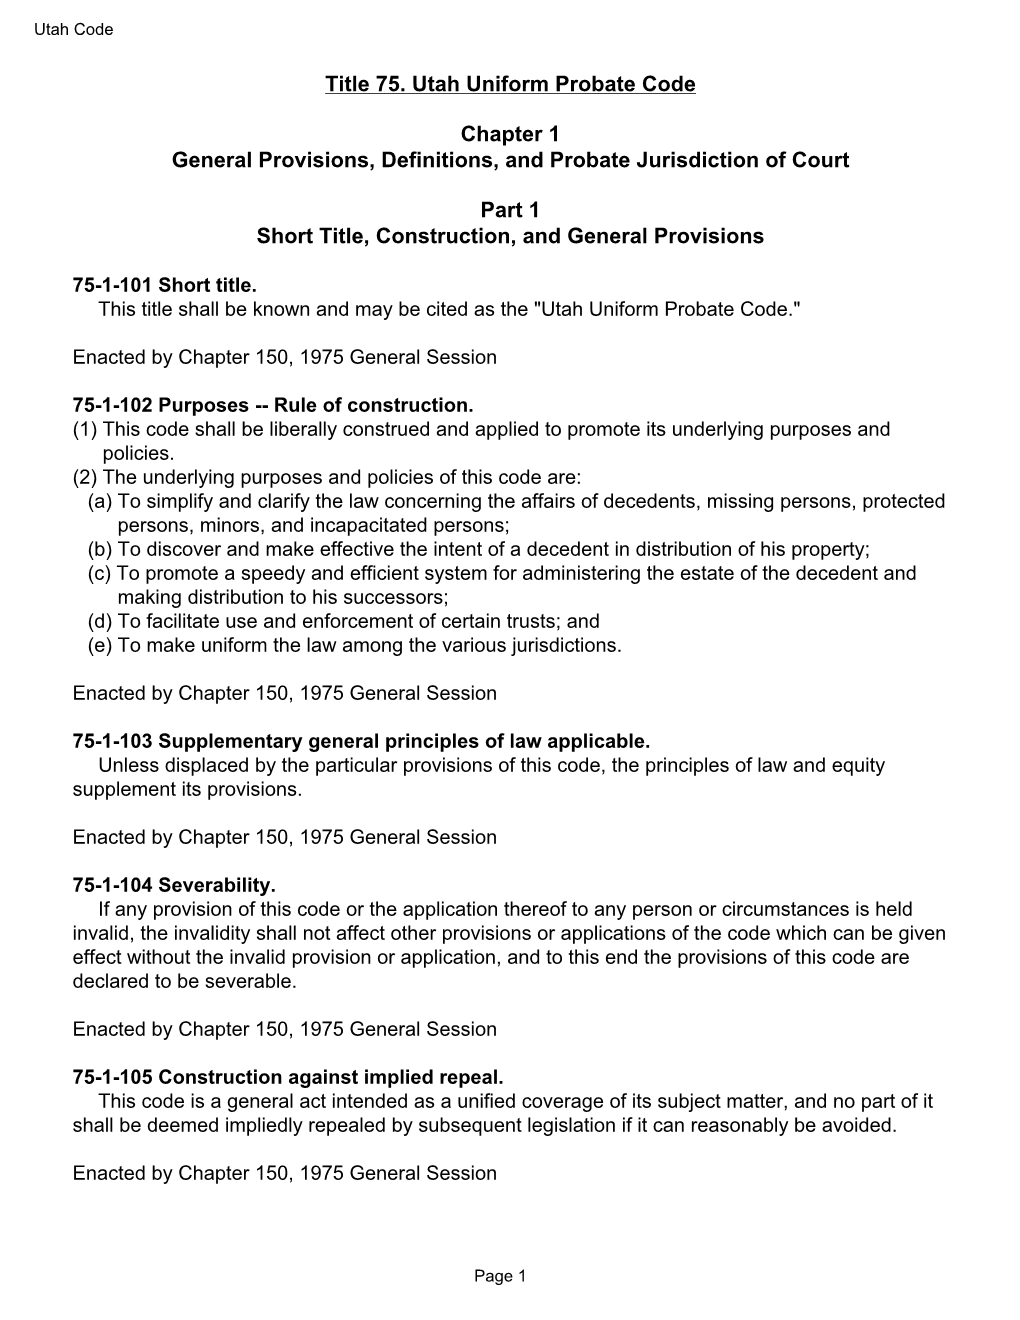 Title 75. Utah Uniform Probate Code Chapter 1 General Provisions